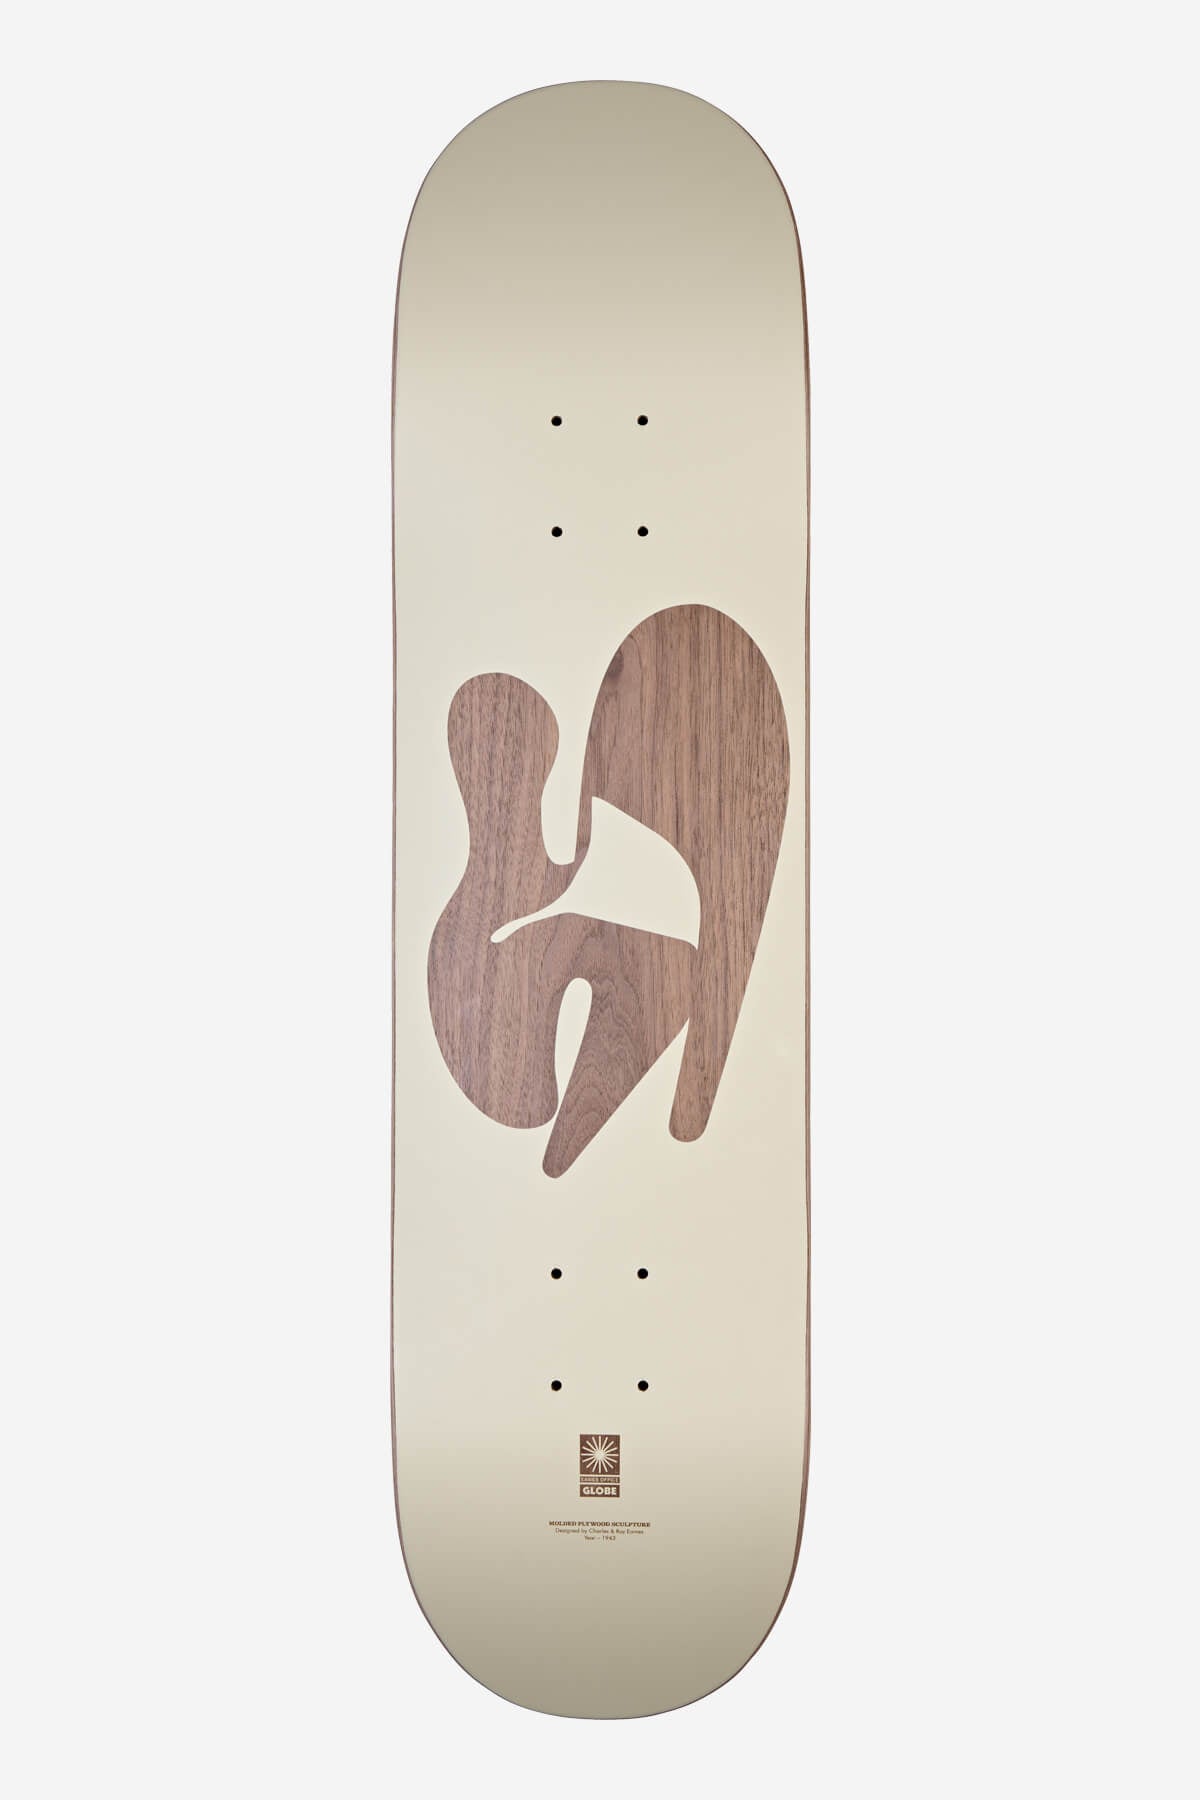 Globe - Silhouette Eames - Plywood Sculpture - 8.0" (en anglais) Skateboard Deck